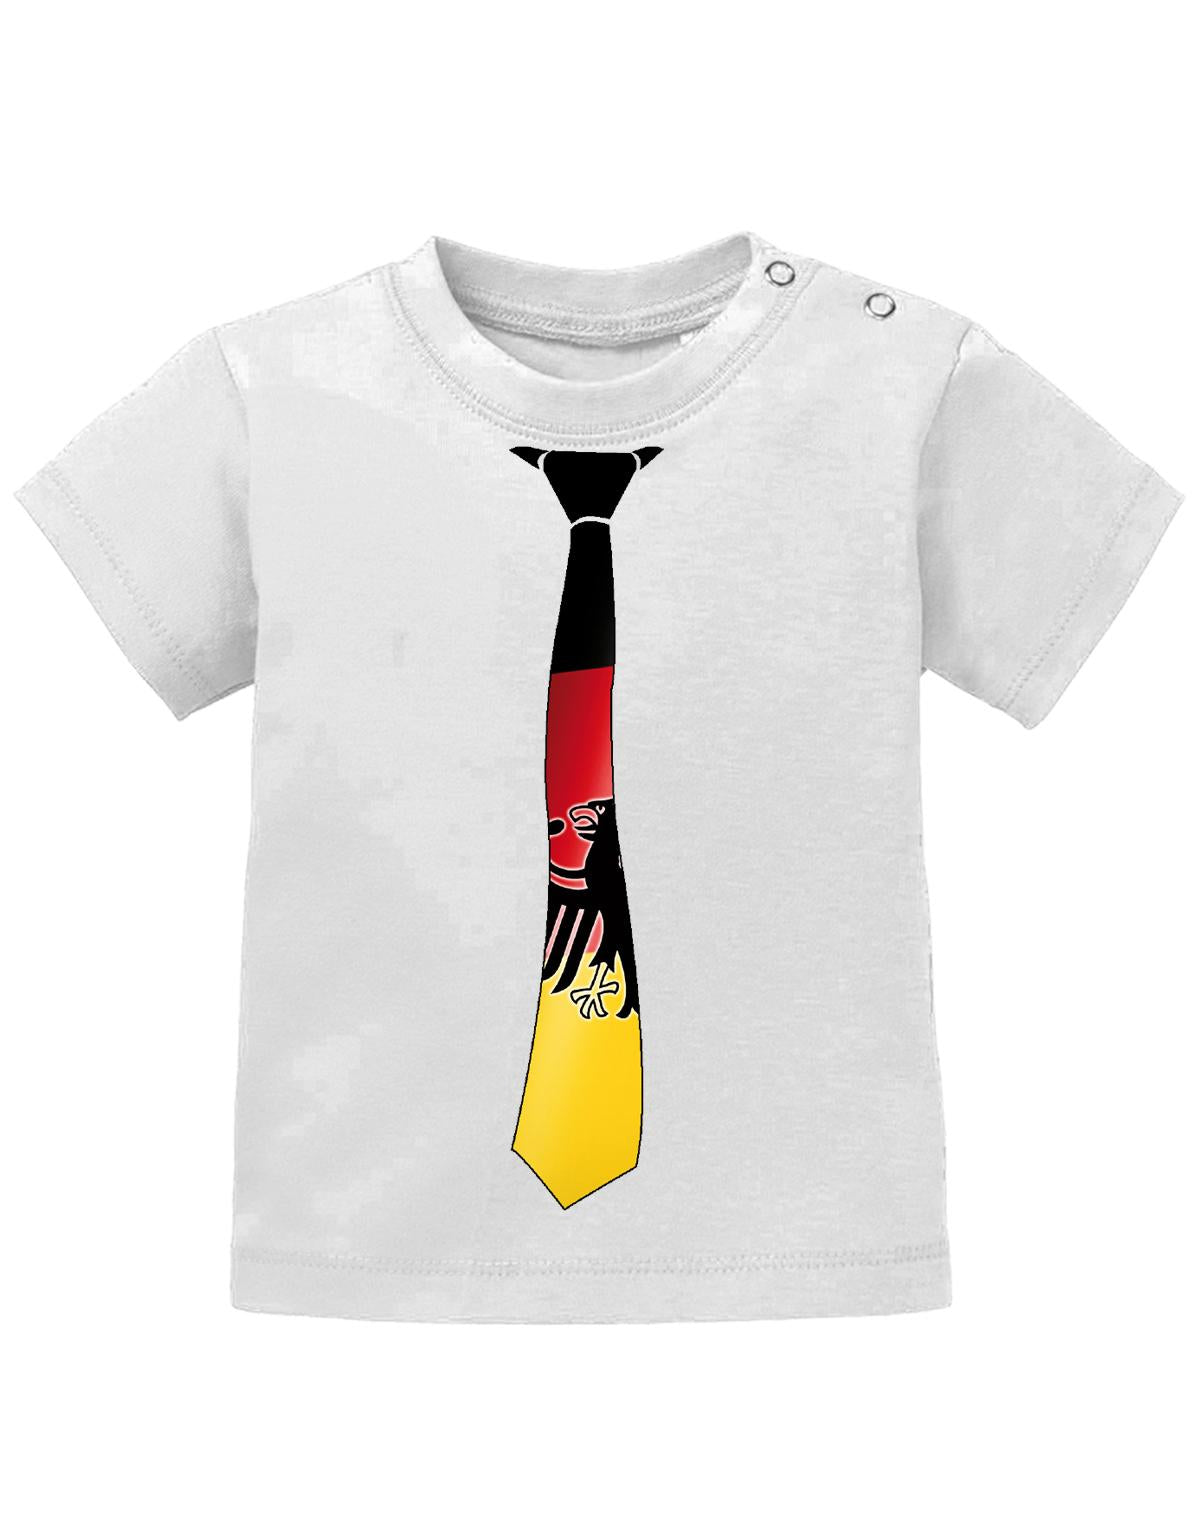 Deutschland Krawatte - EM WM - Fan - Baby T-Shirt